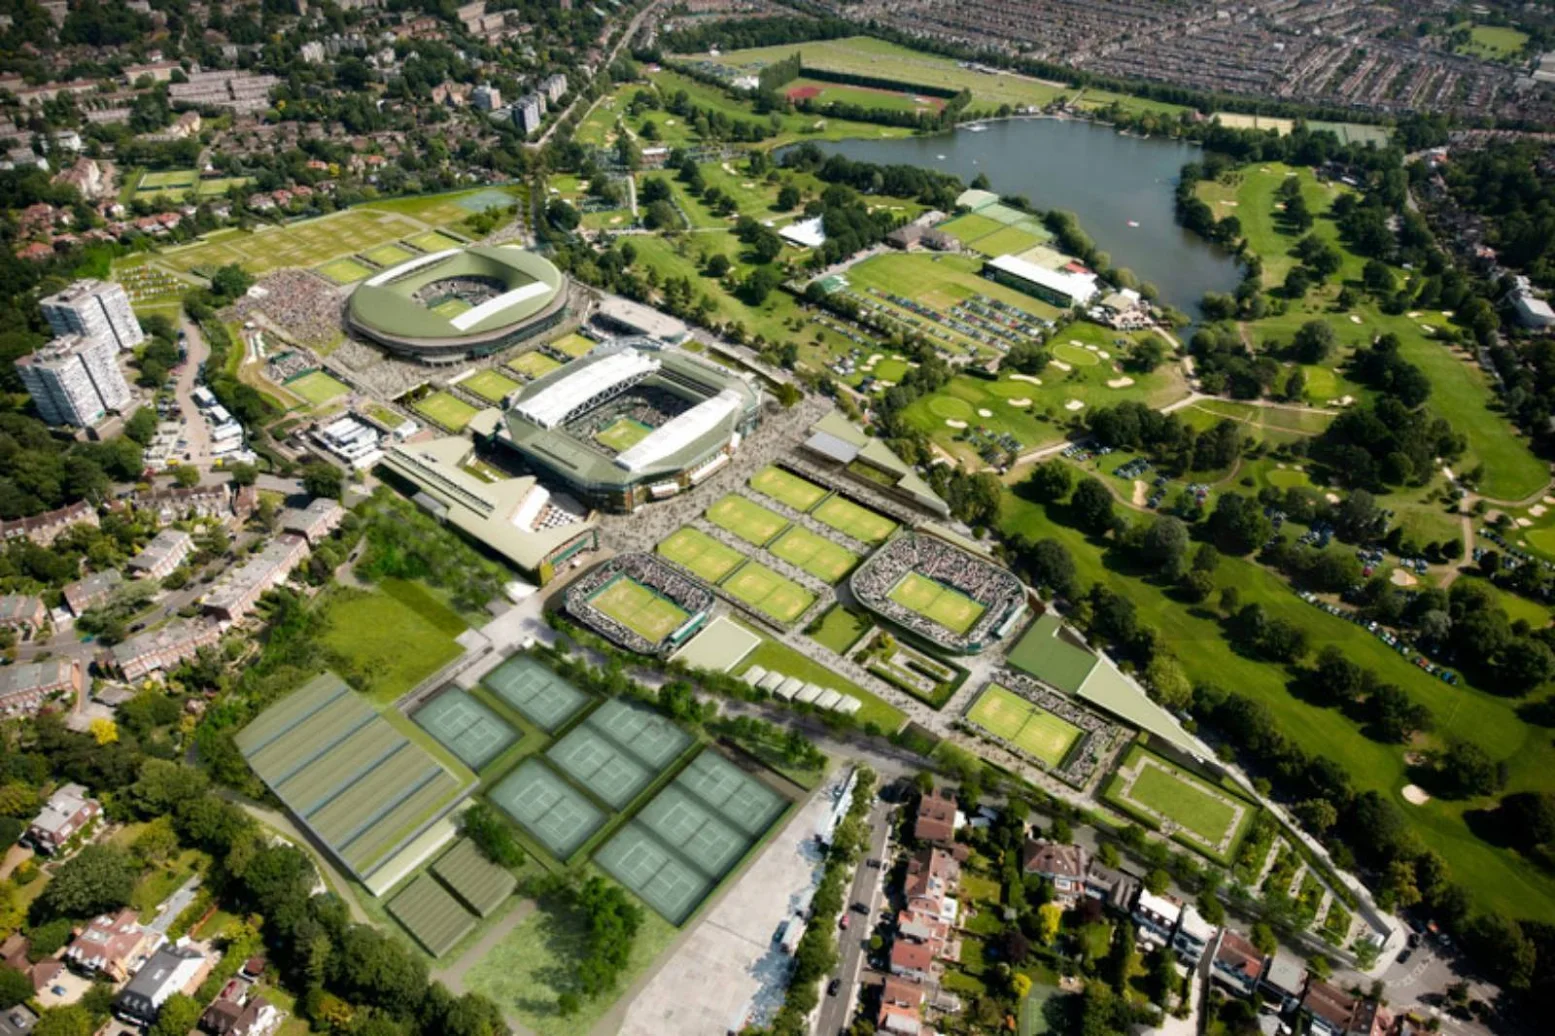 Wimbledon Master Plan by Grimshaw Architects